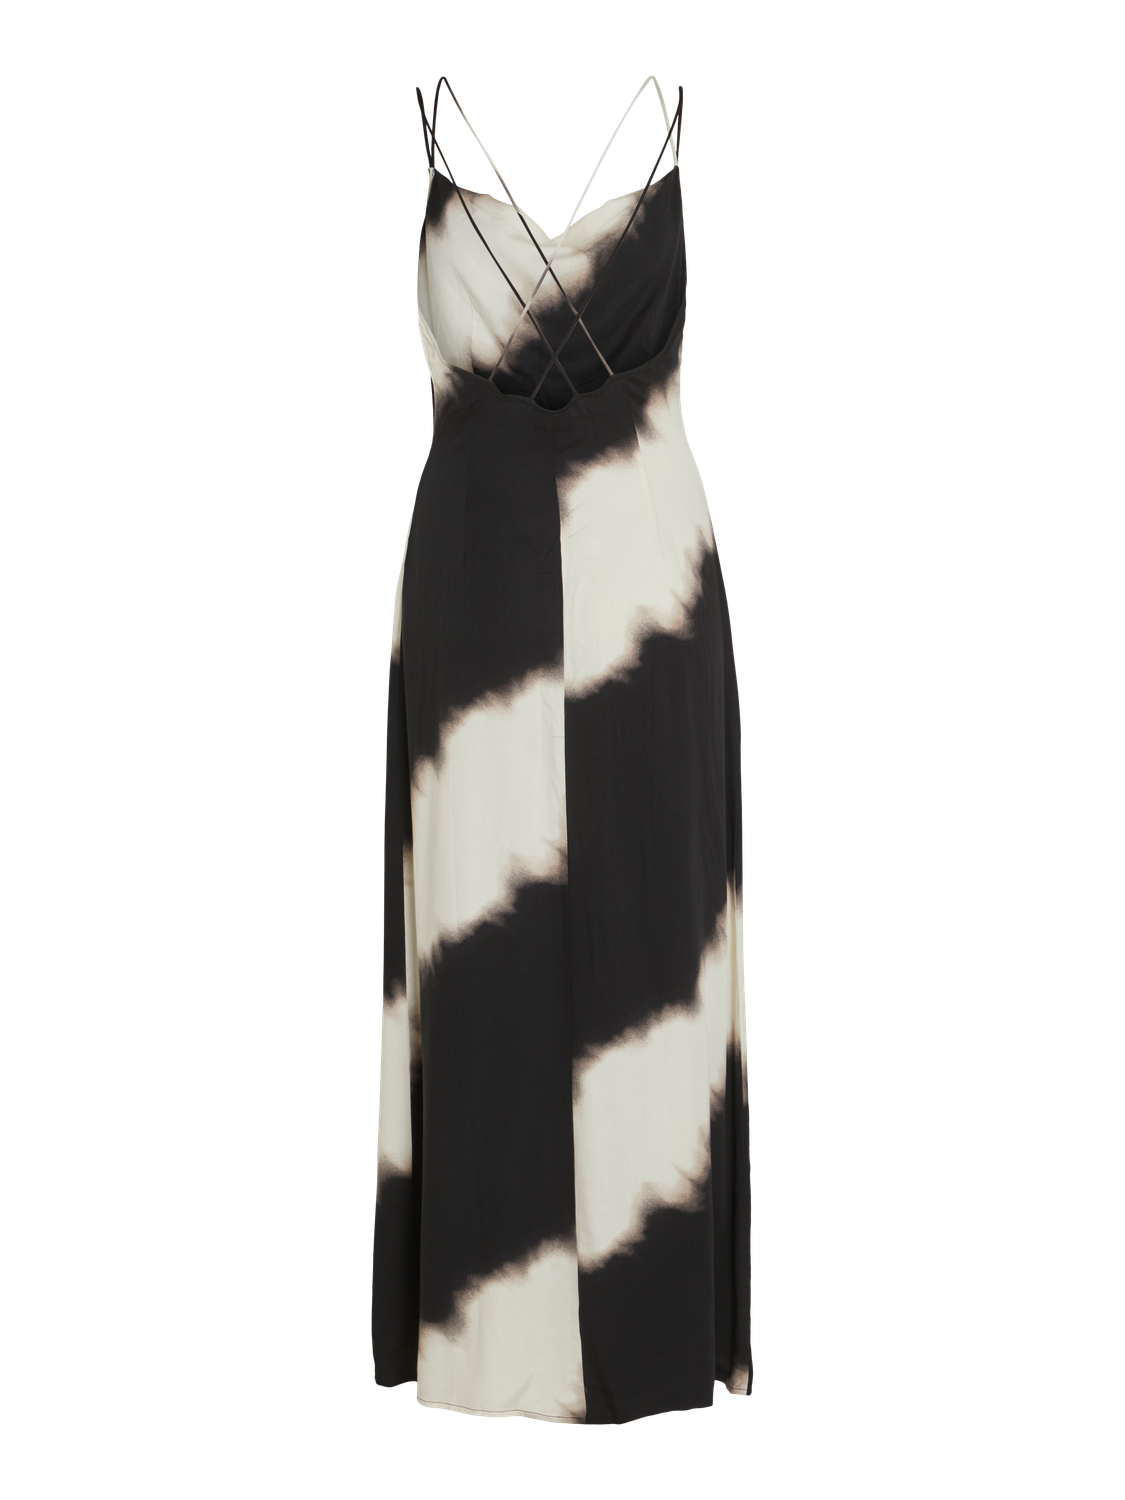 VIVALENTINA Dress - Birch